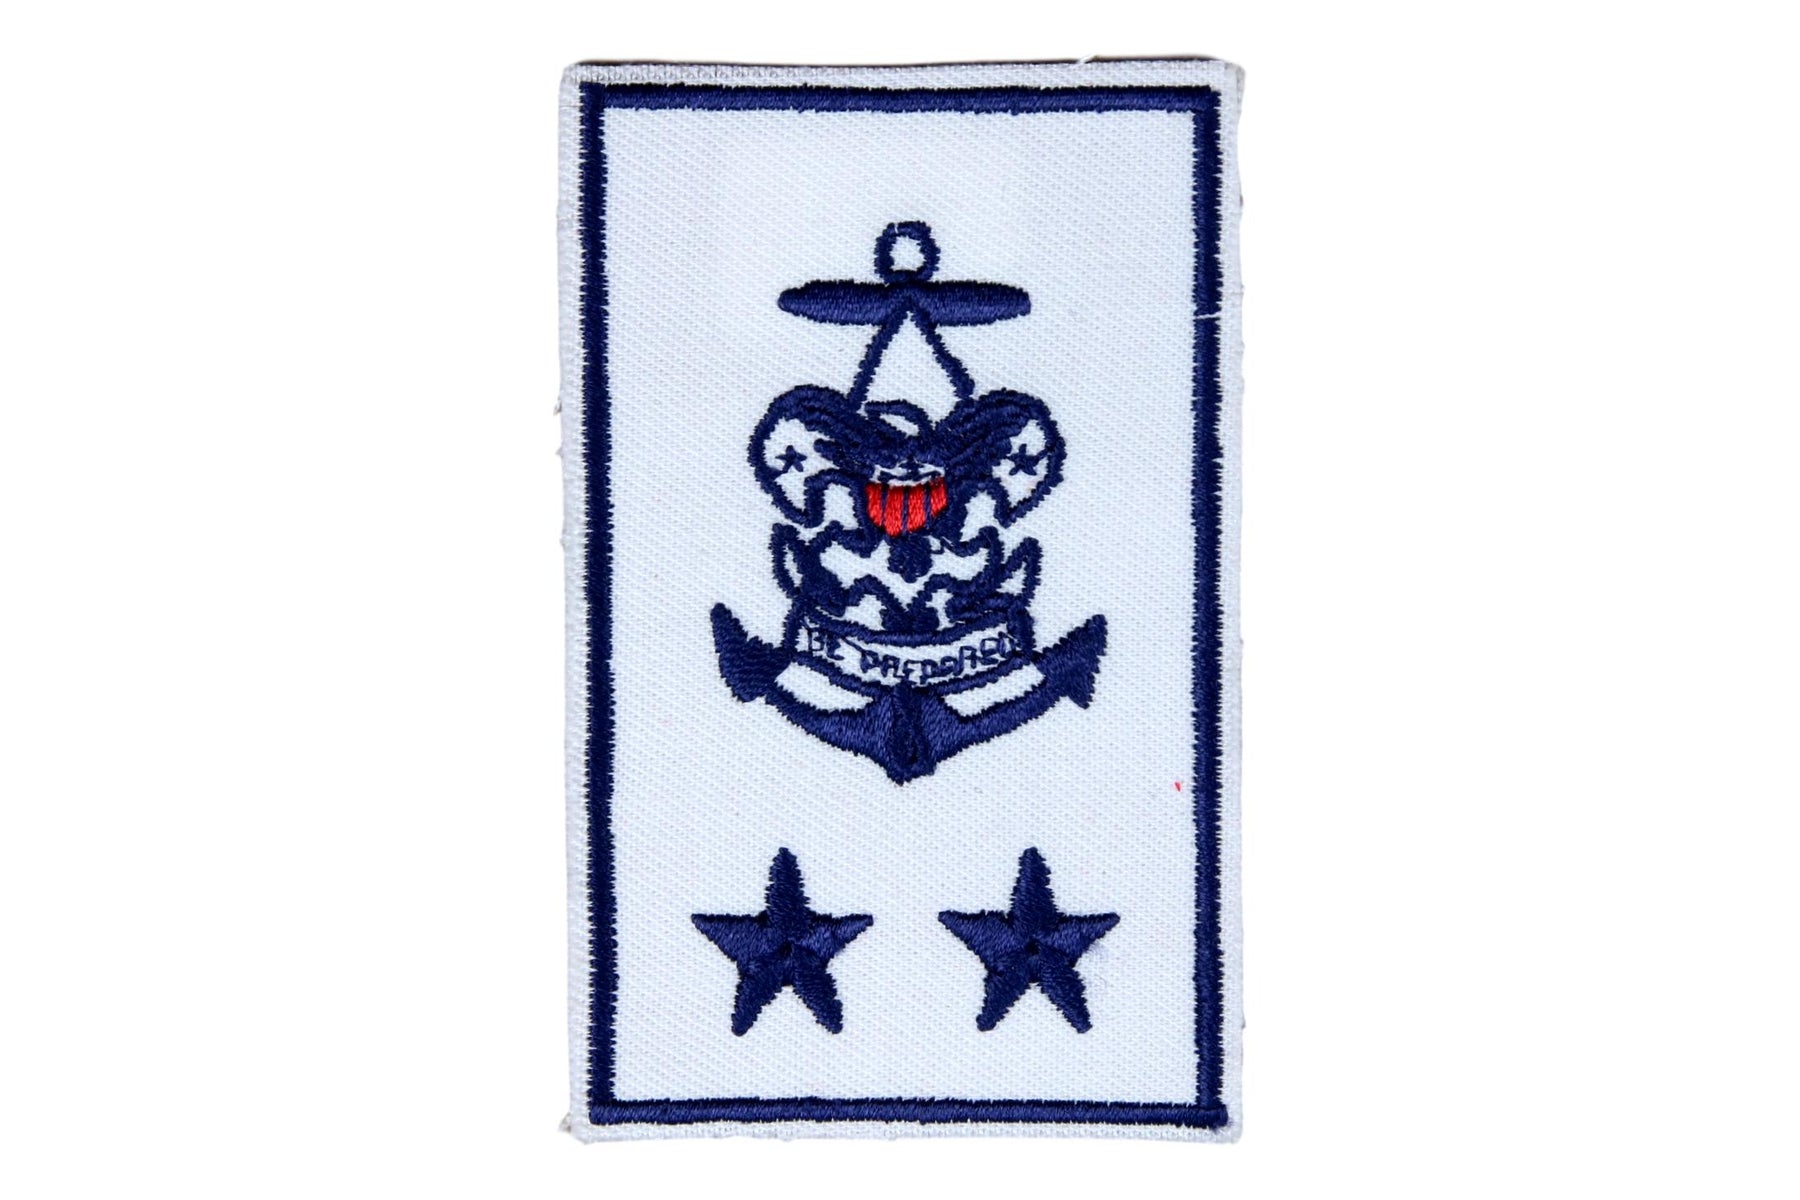 Sea Scout Council Staff Patch